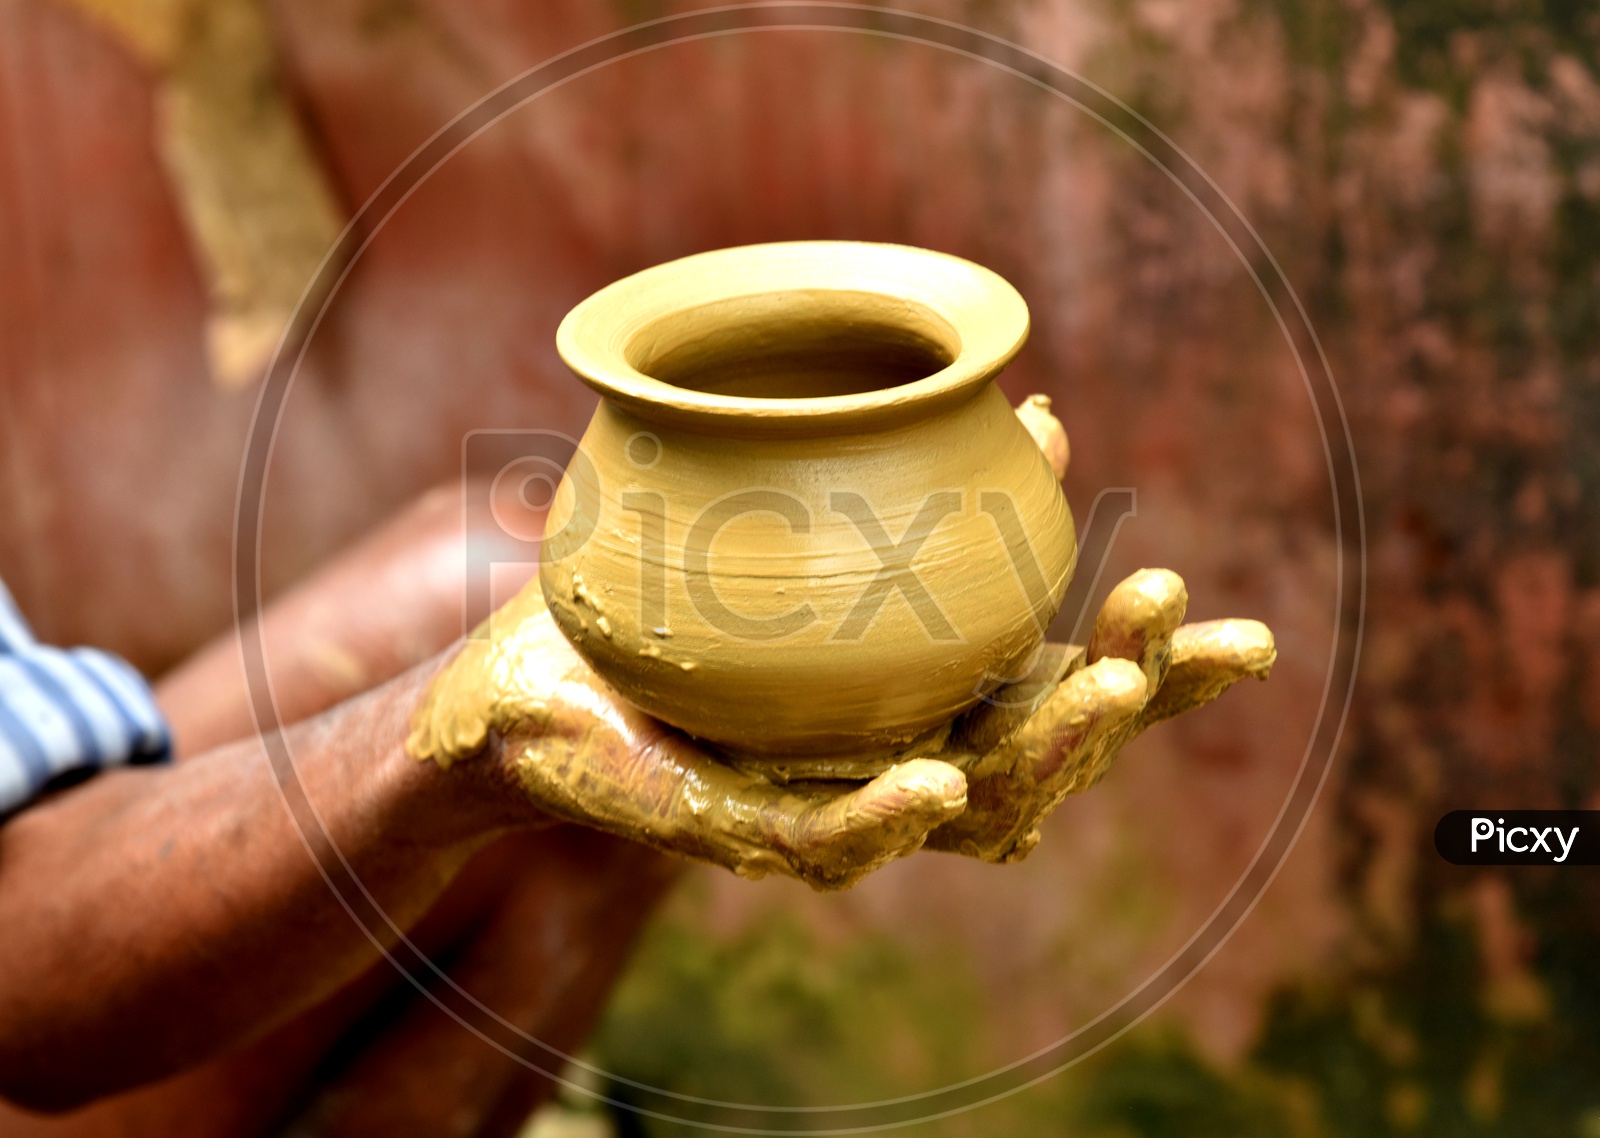 Clay Pot in Araku Valley